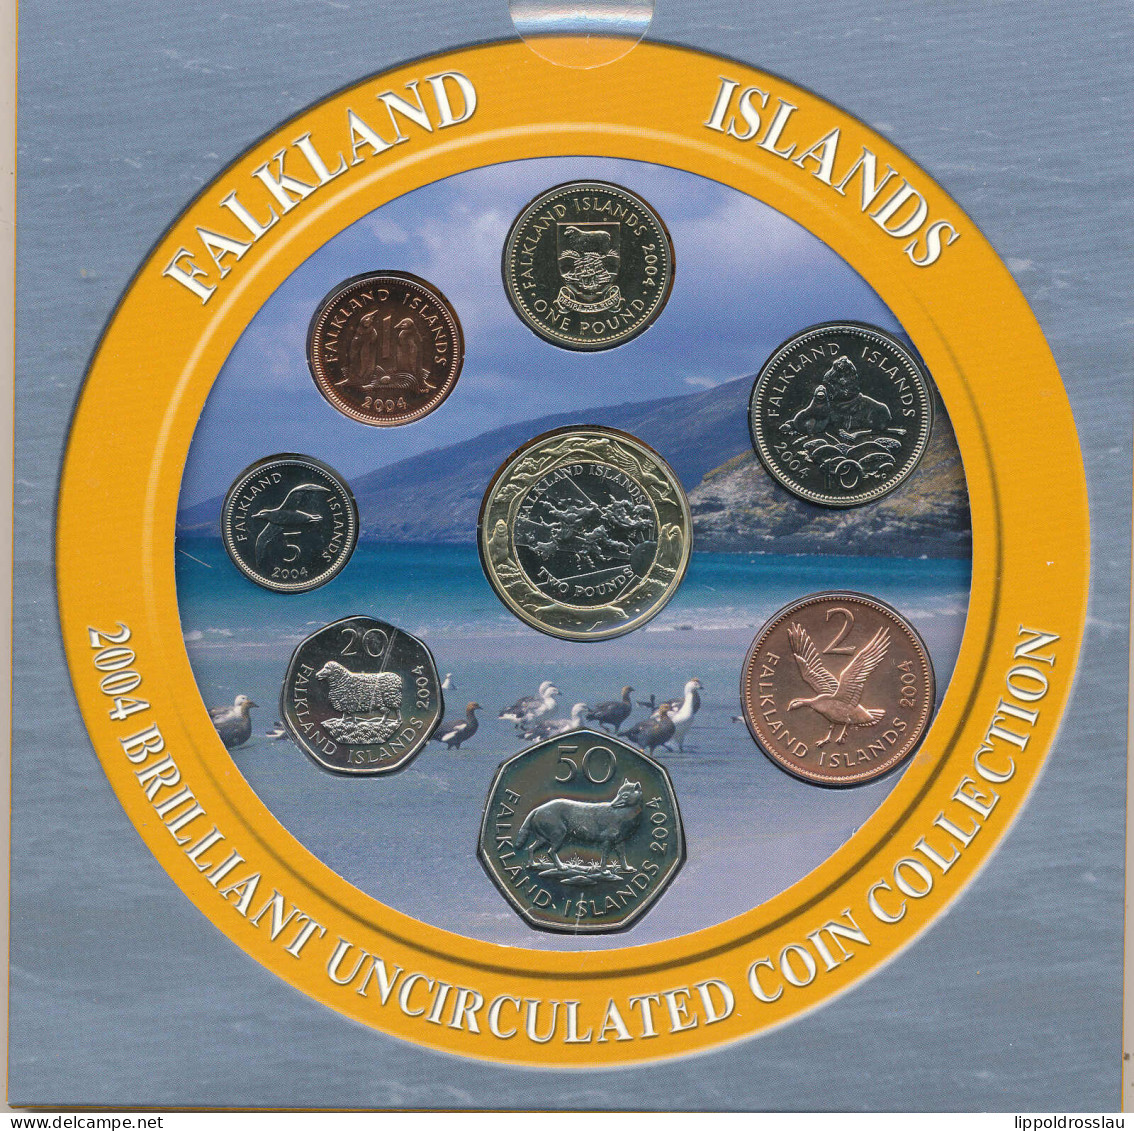 FALKLANDINSELN 2004 BRILLANT UNZIRKULIERTE MÜNZSAMMLUNG Set 8x Münzen 1 Penny ~ £ 2 Pfund BUNC - Falkland Islands